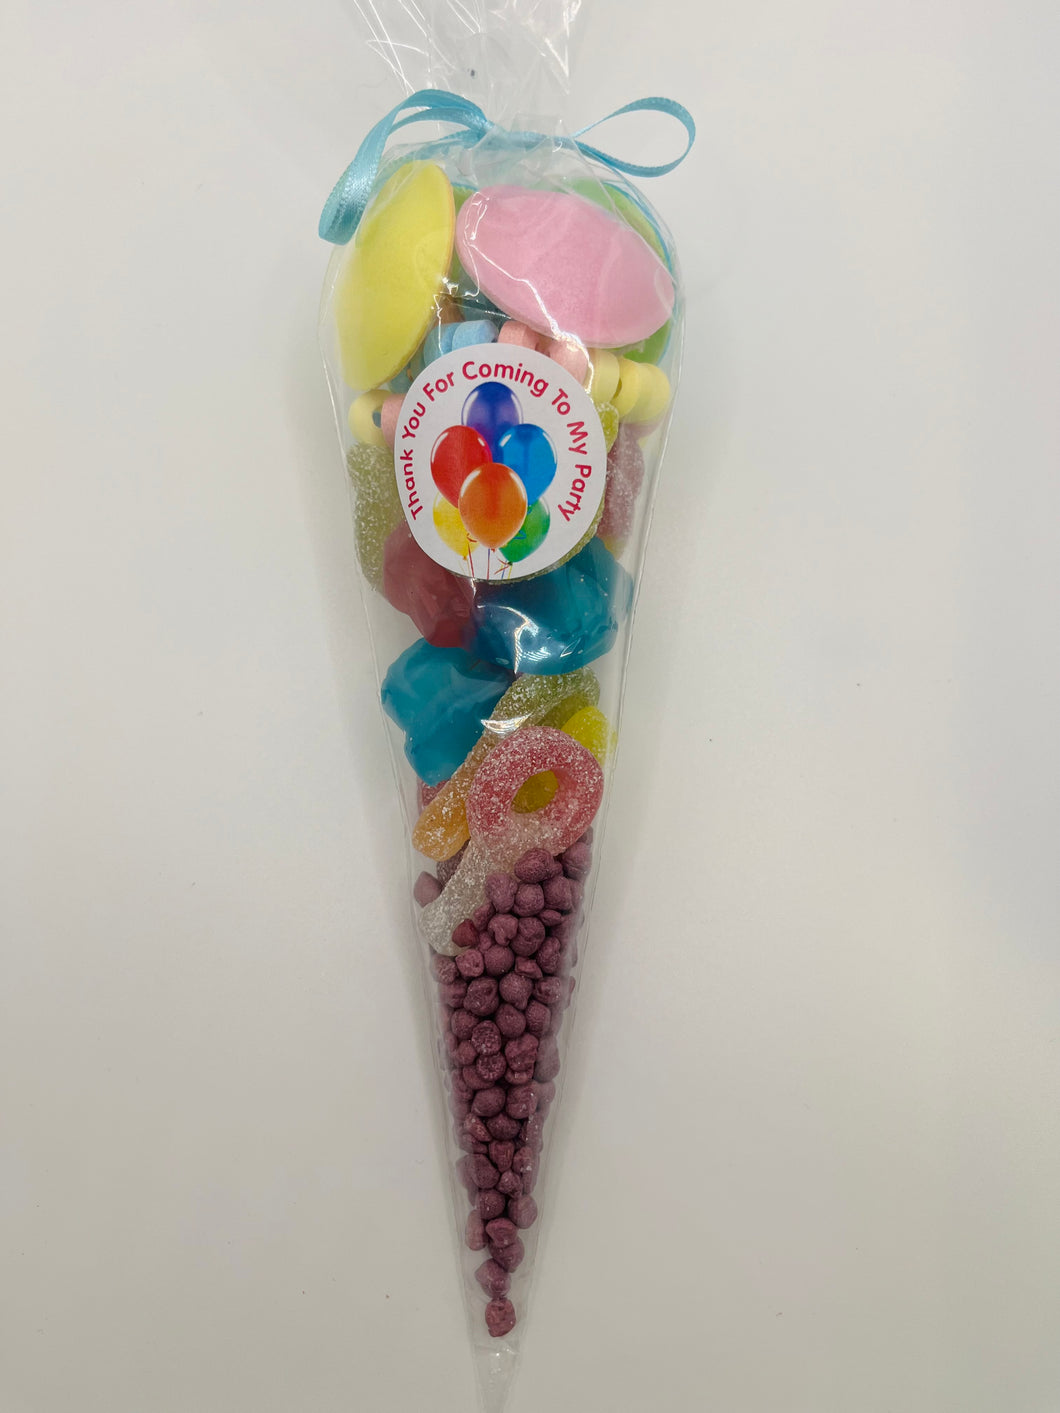 Vegan Sweet cone/Partybag